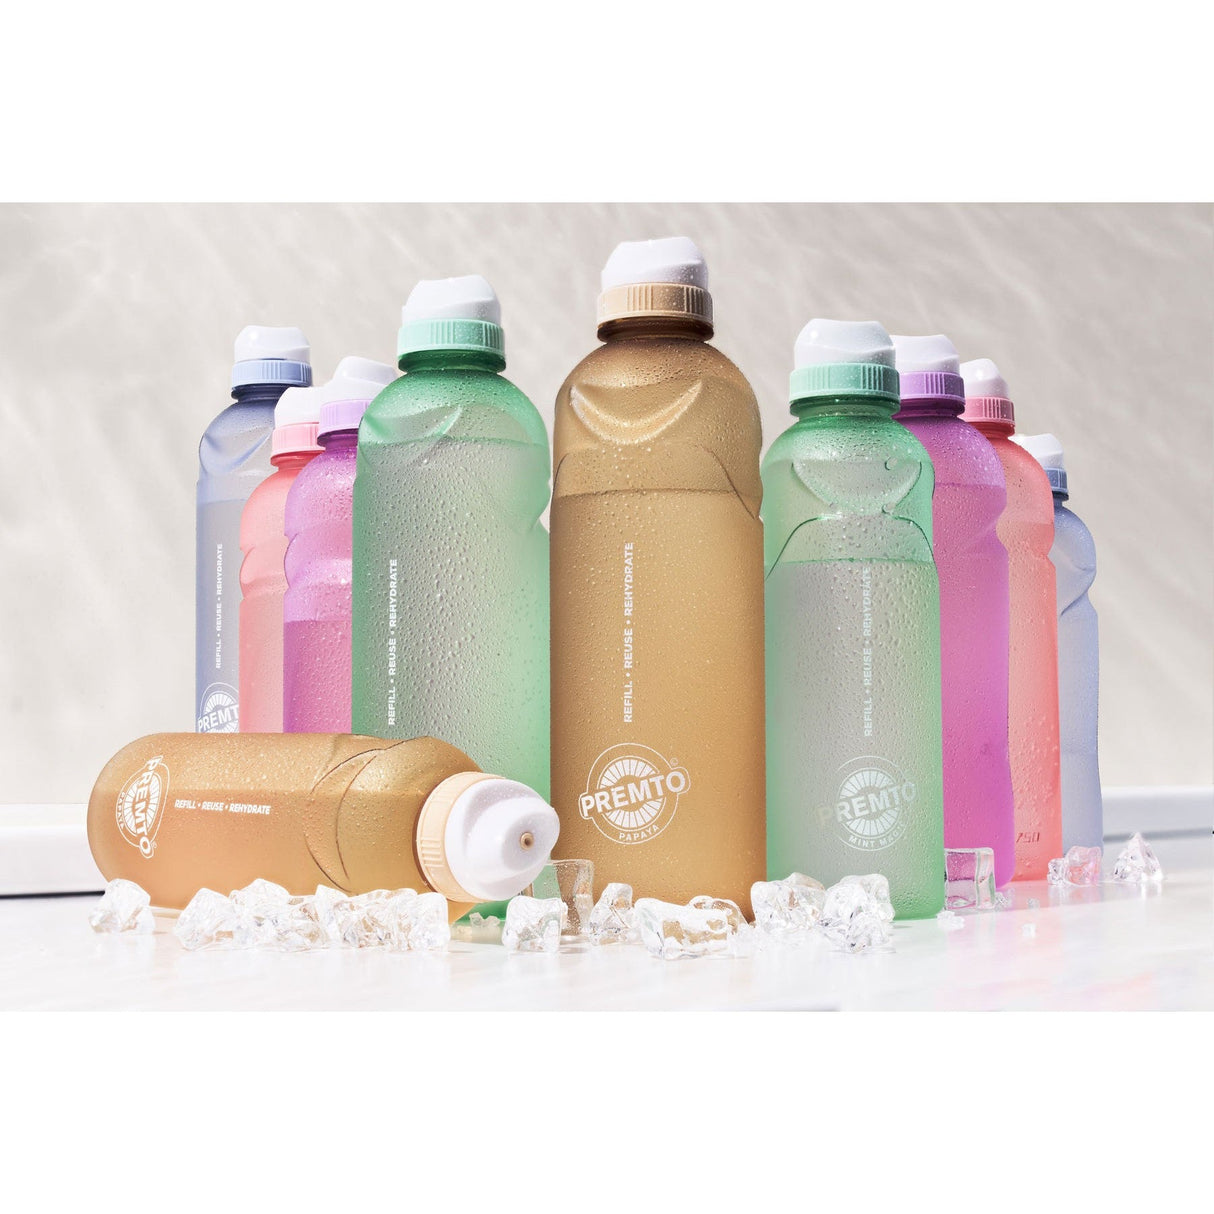 Premto 750ml Stealth Soft Touch Bottle - Pastel - Mint Magic-Water Bottles-Premto|StationeryShop.co.uk